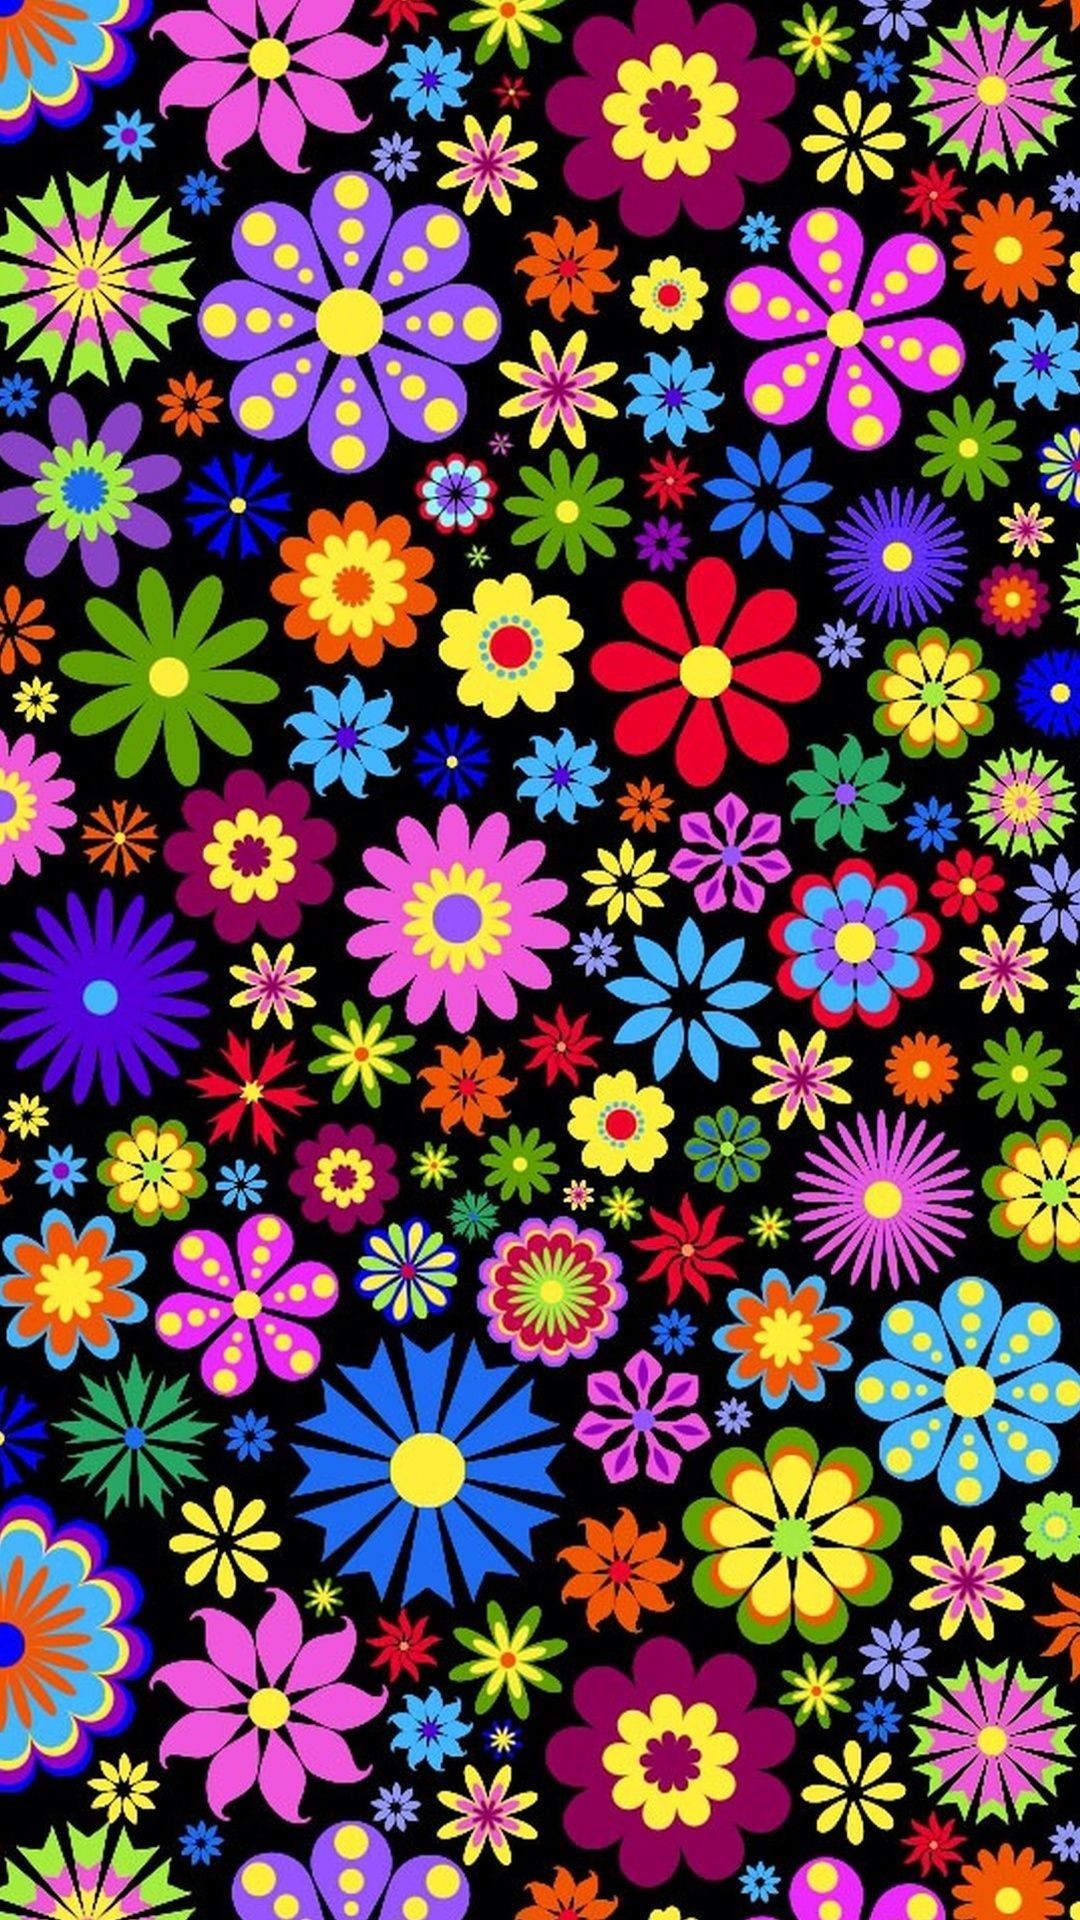 1080x1920  Mystical Flowers Galaxy Wallpaper #androidwallpaper  #iphonewallpaper # wallpaper #galaxy #sparkle #glitter